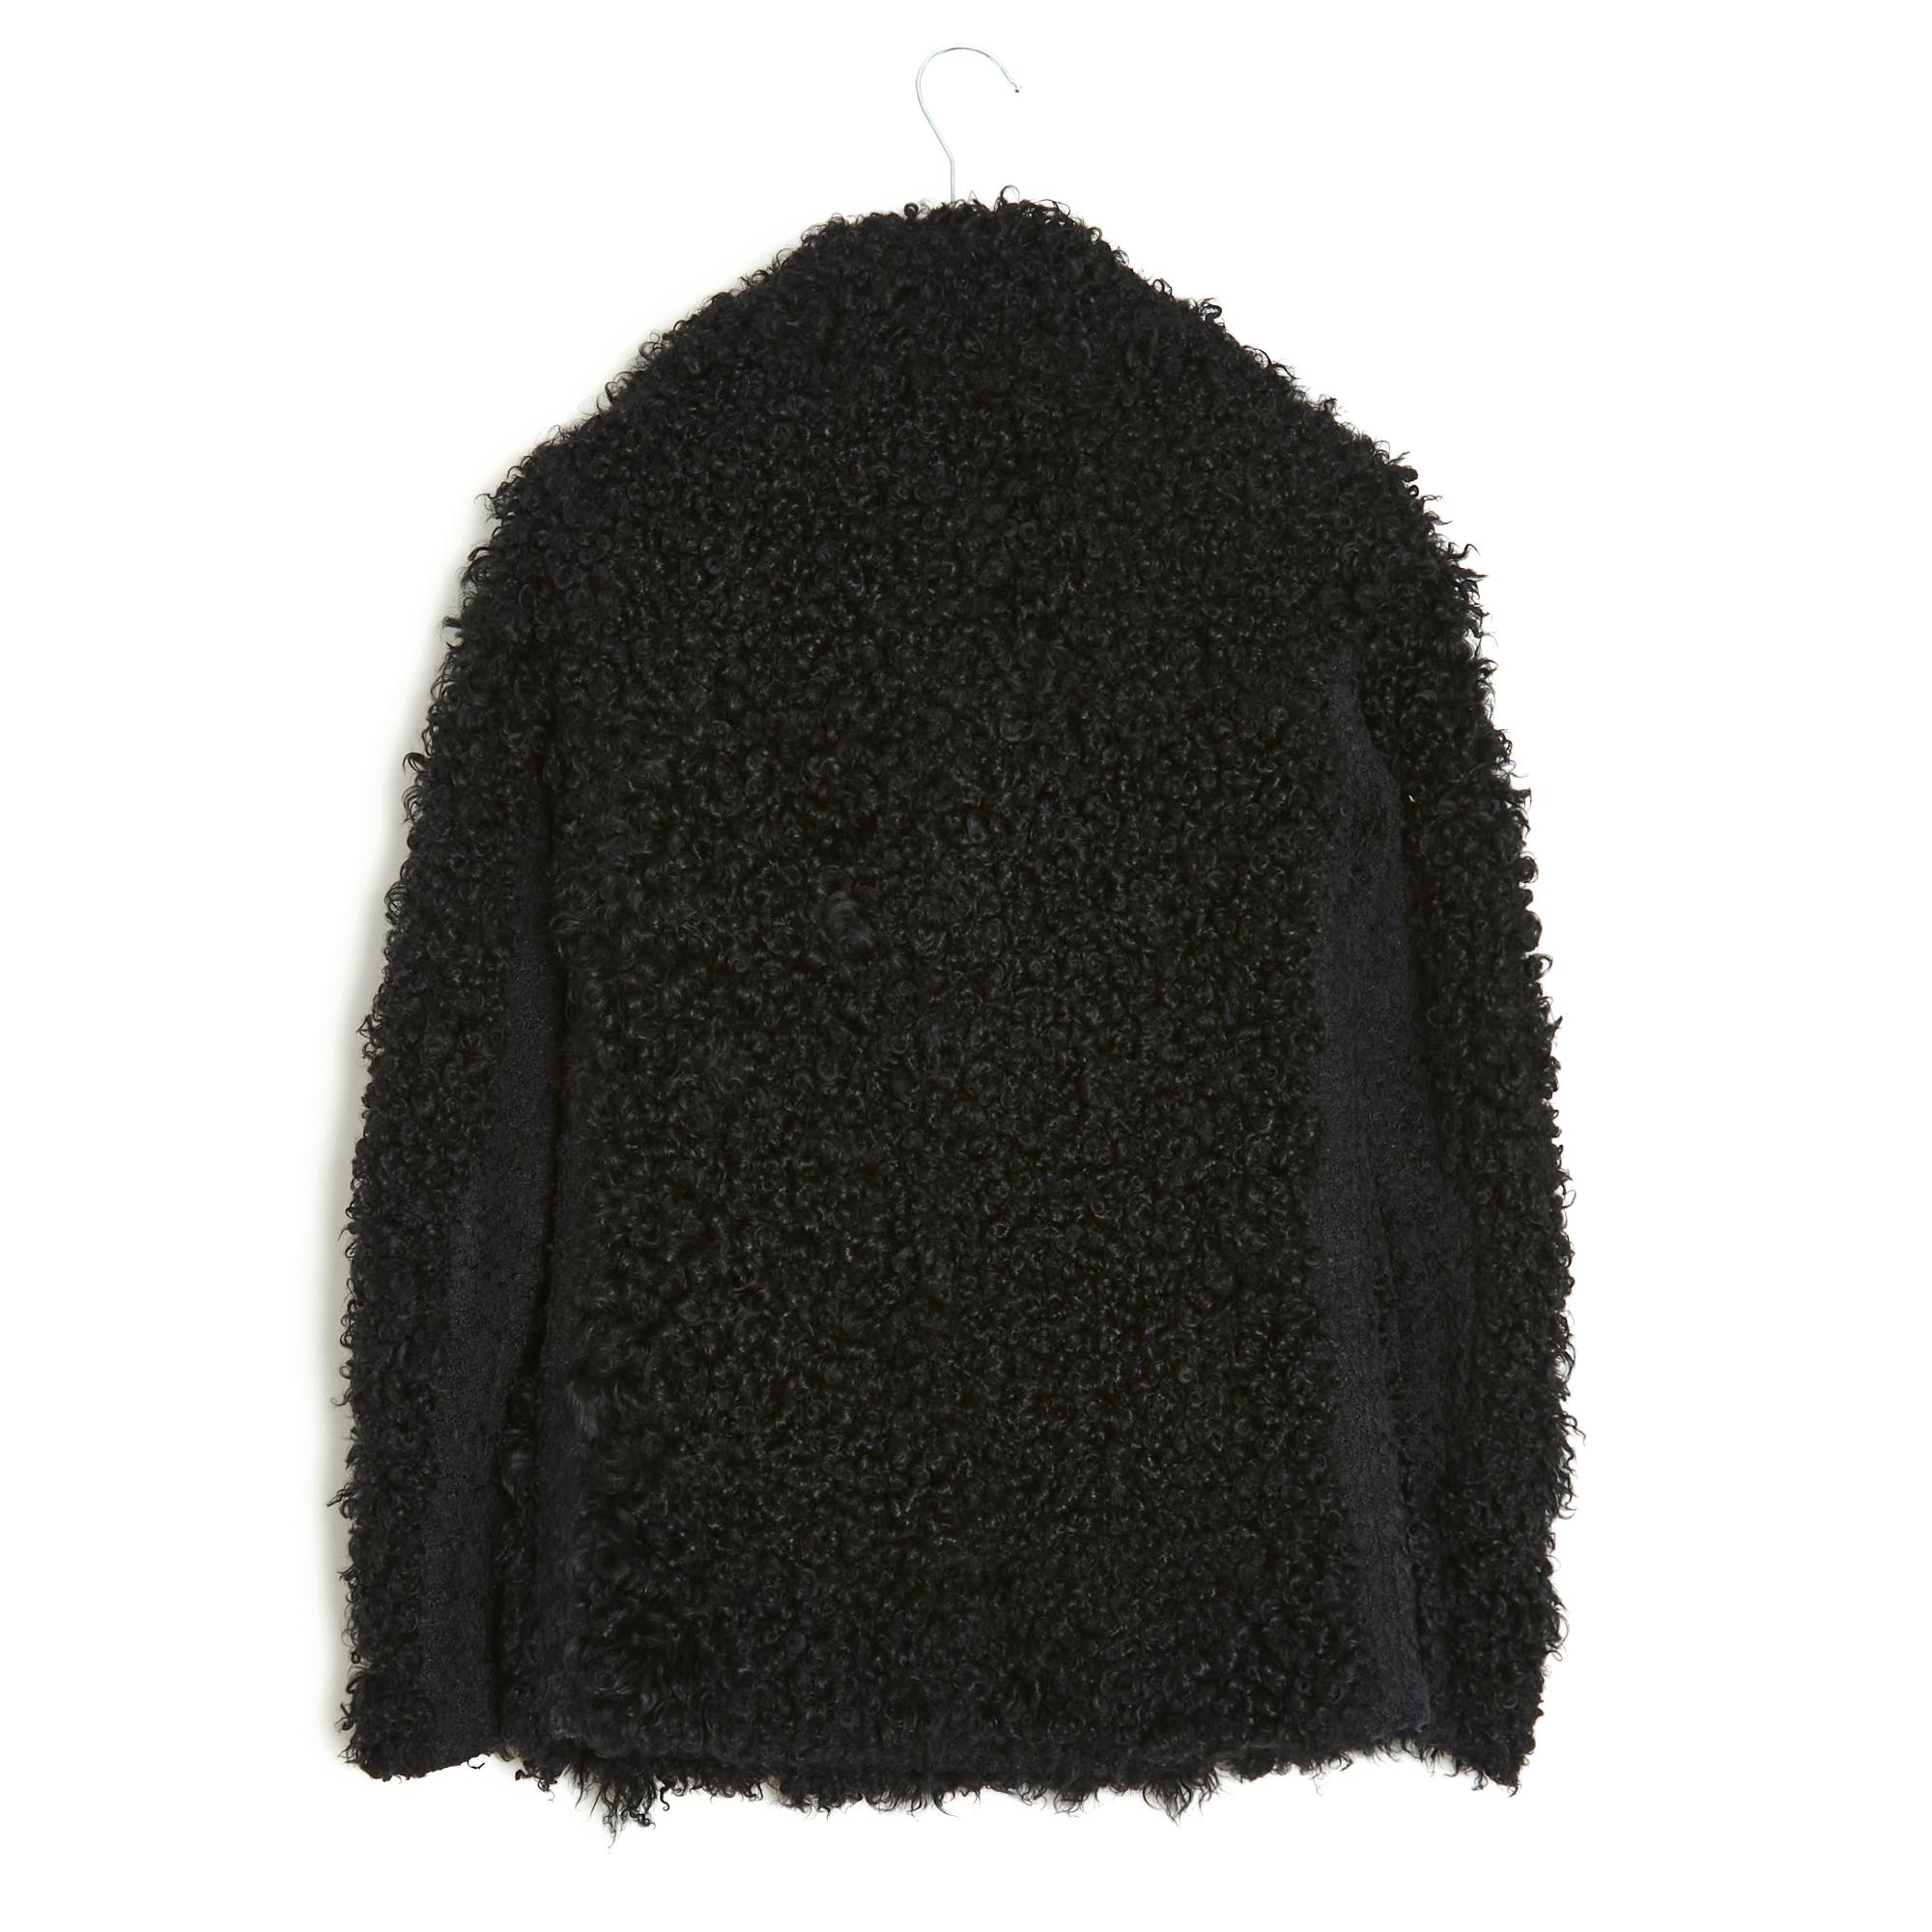 Chanel FR36 Black Shearling Pea Coat Jacket 2